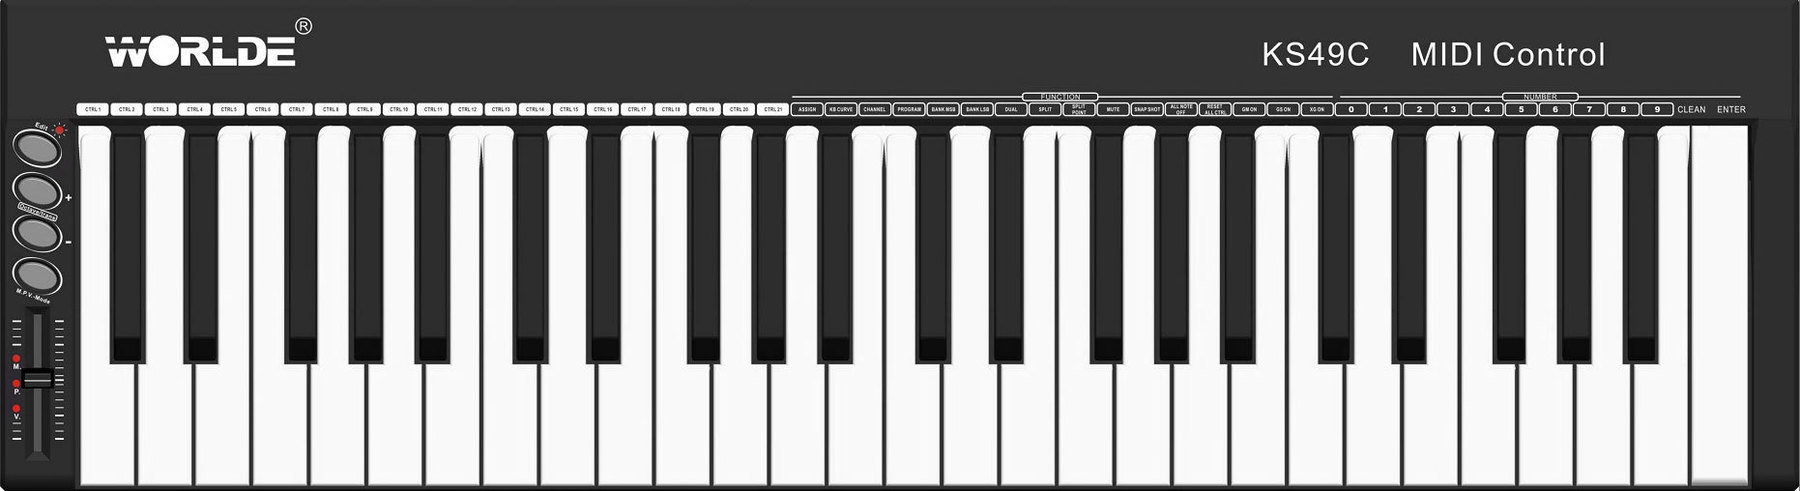 MIDI-koskettimet Worlde KS49C